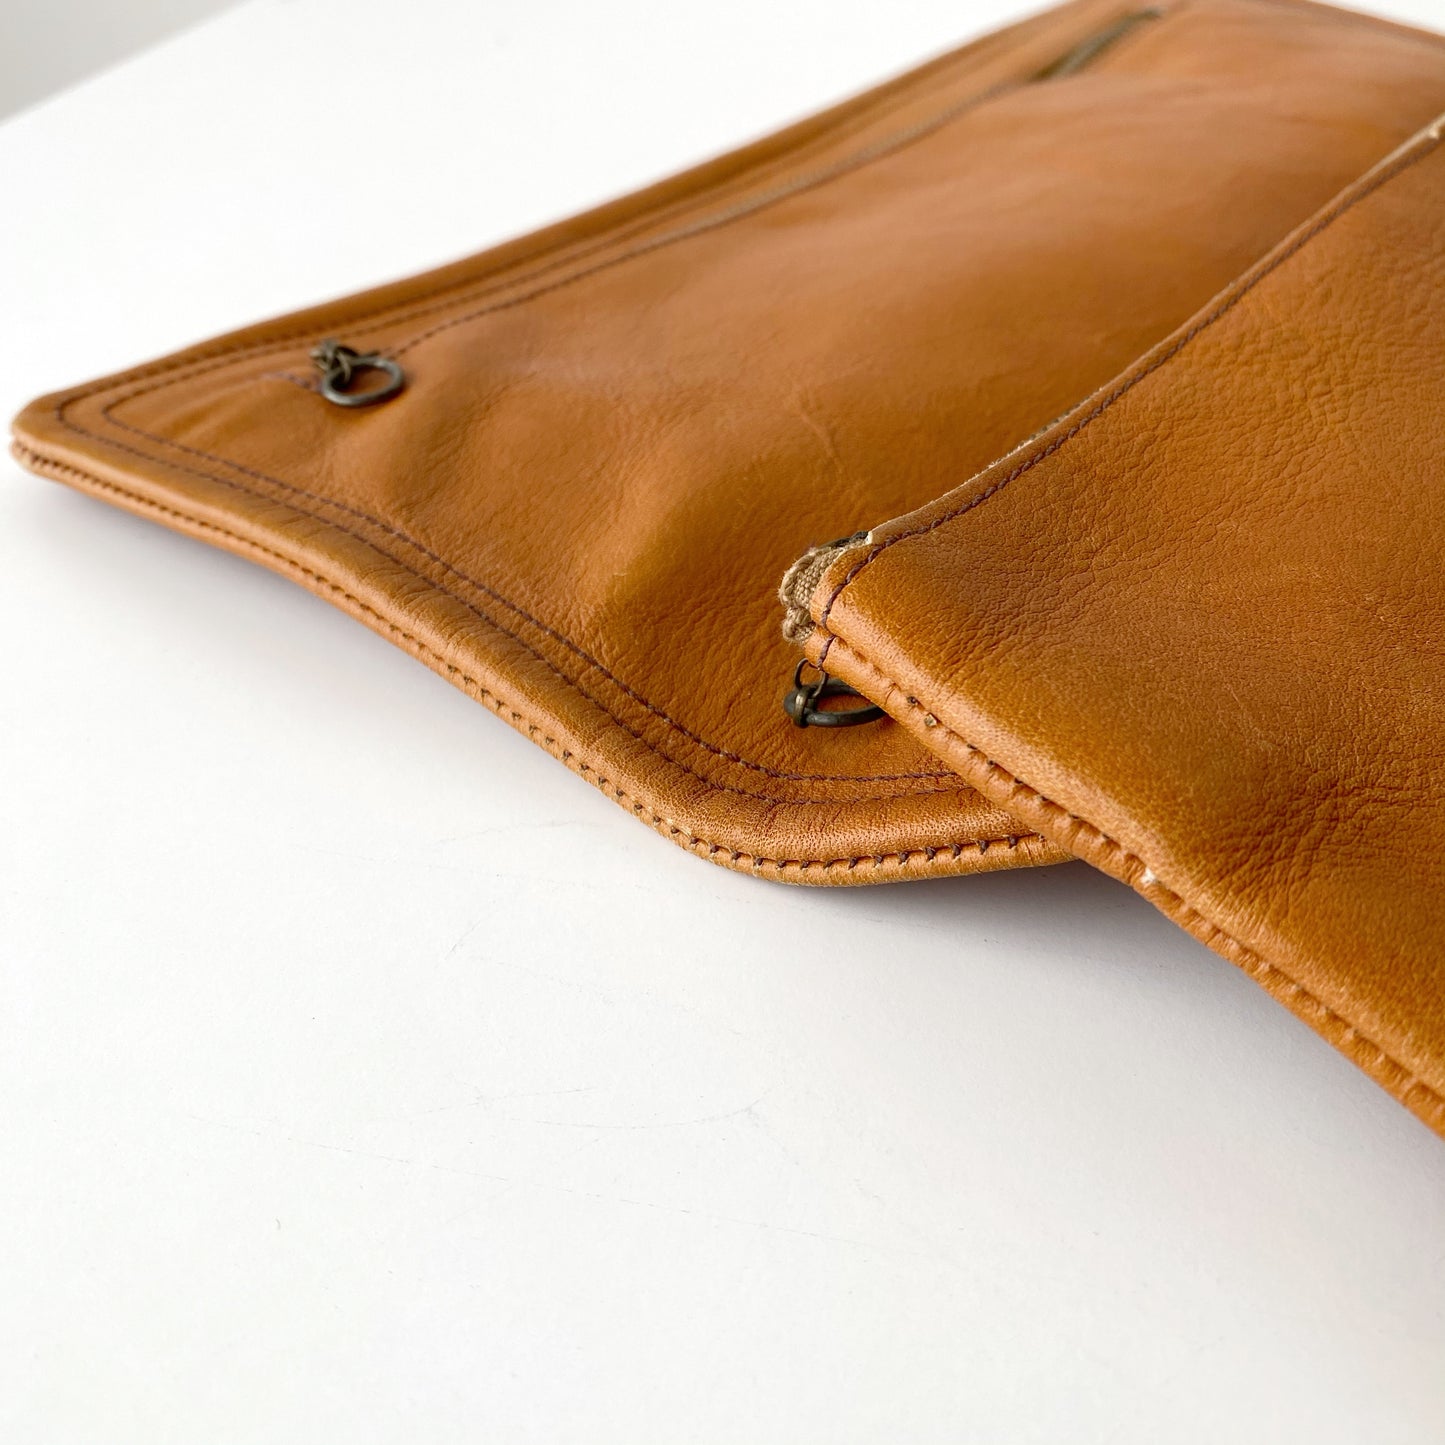 Vintage 1970’s Leather Folding Clutch Purse